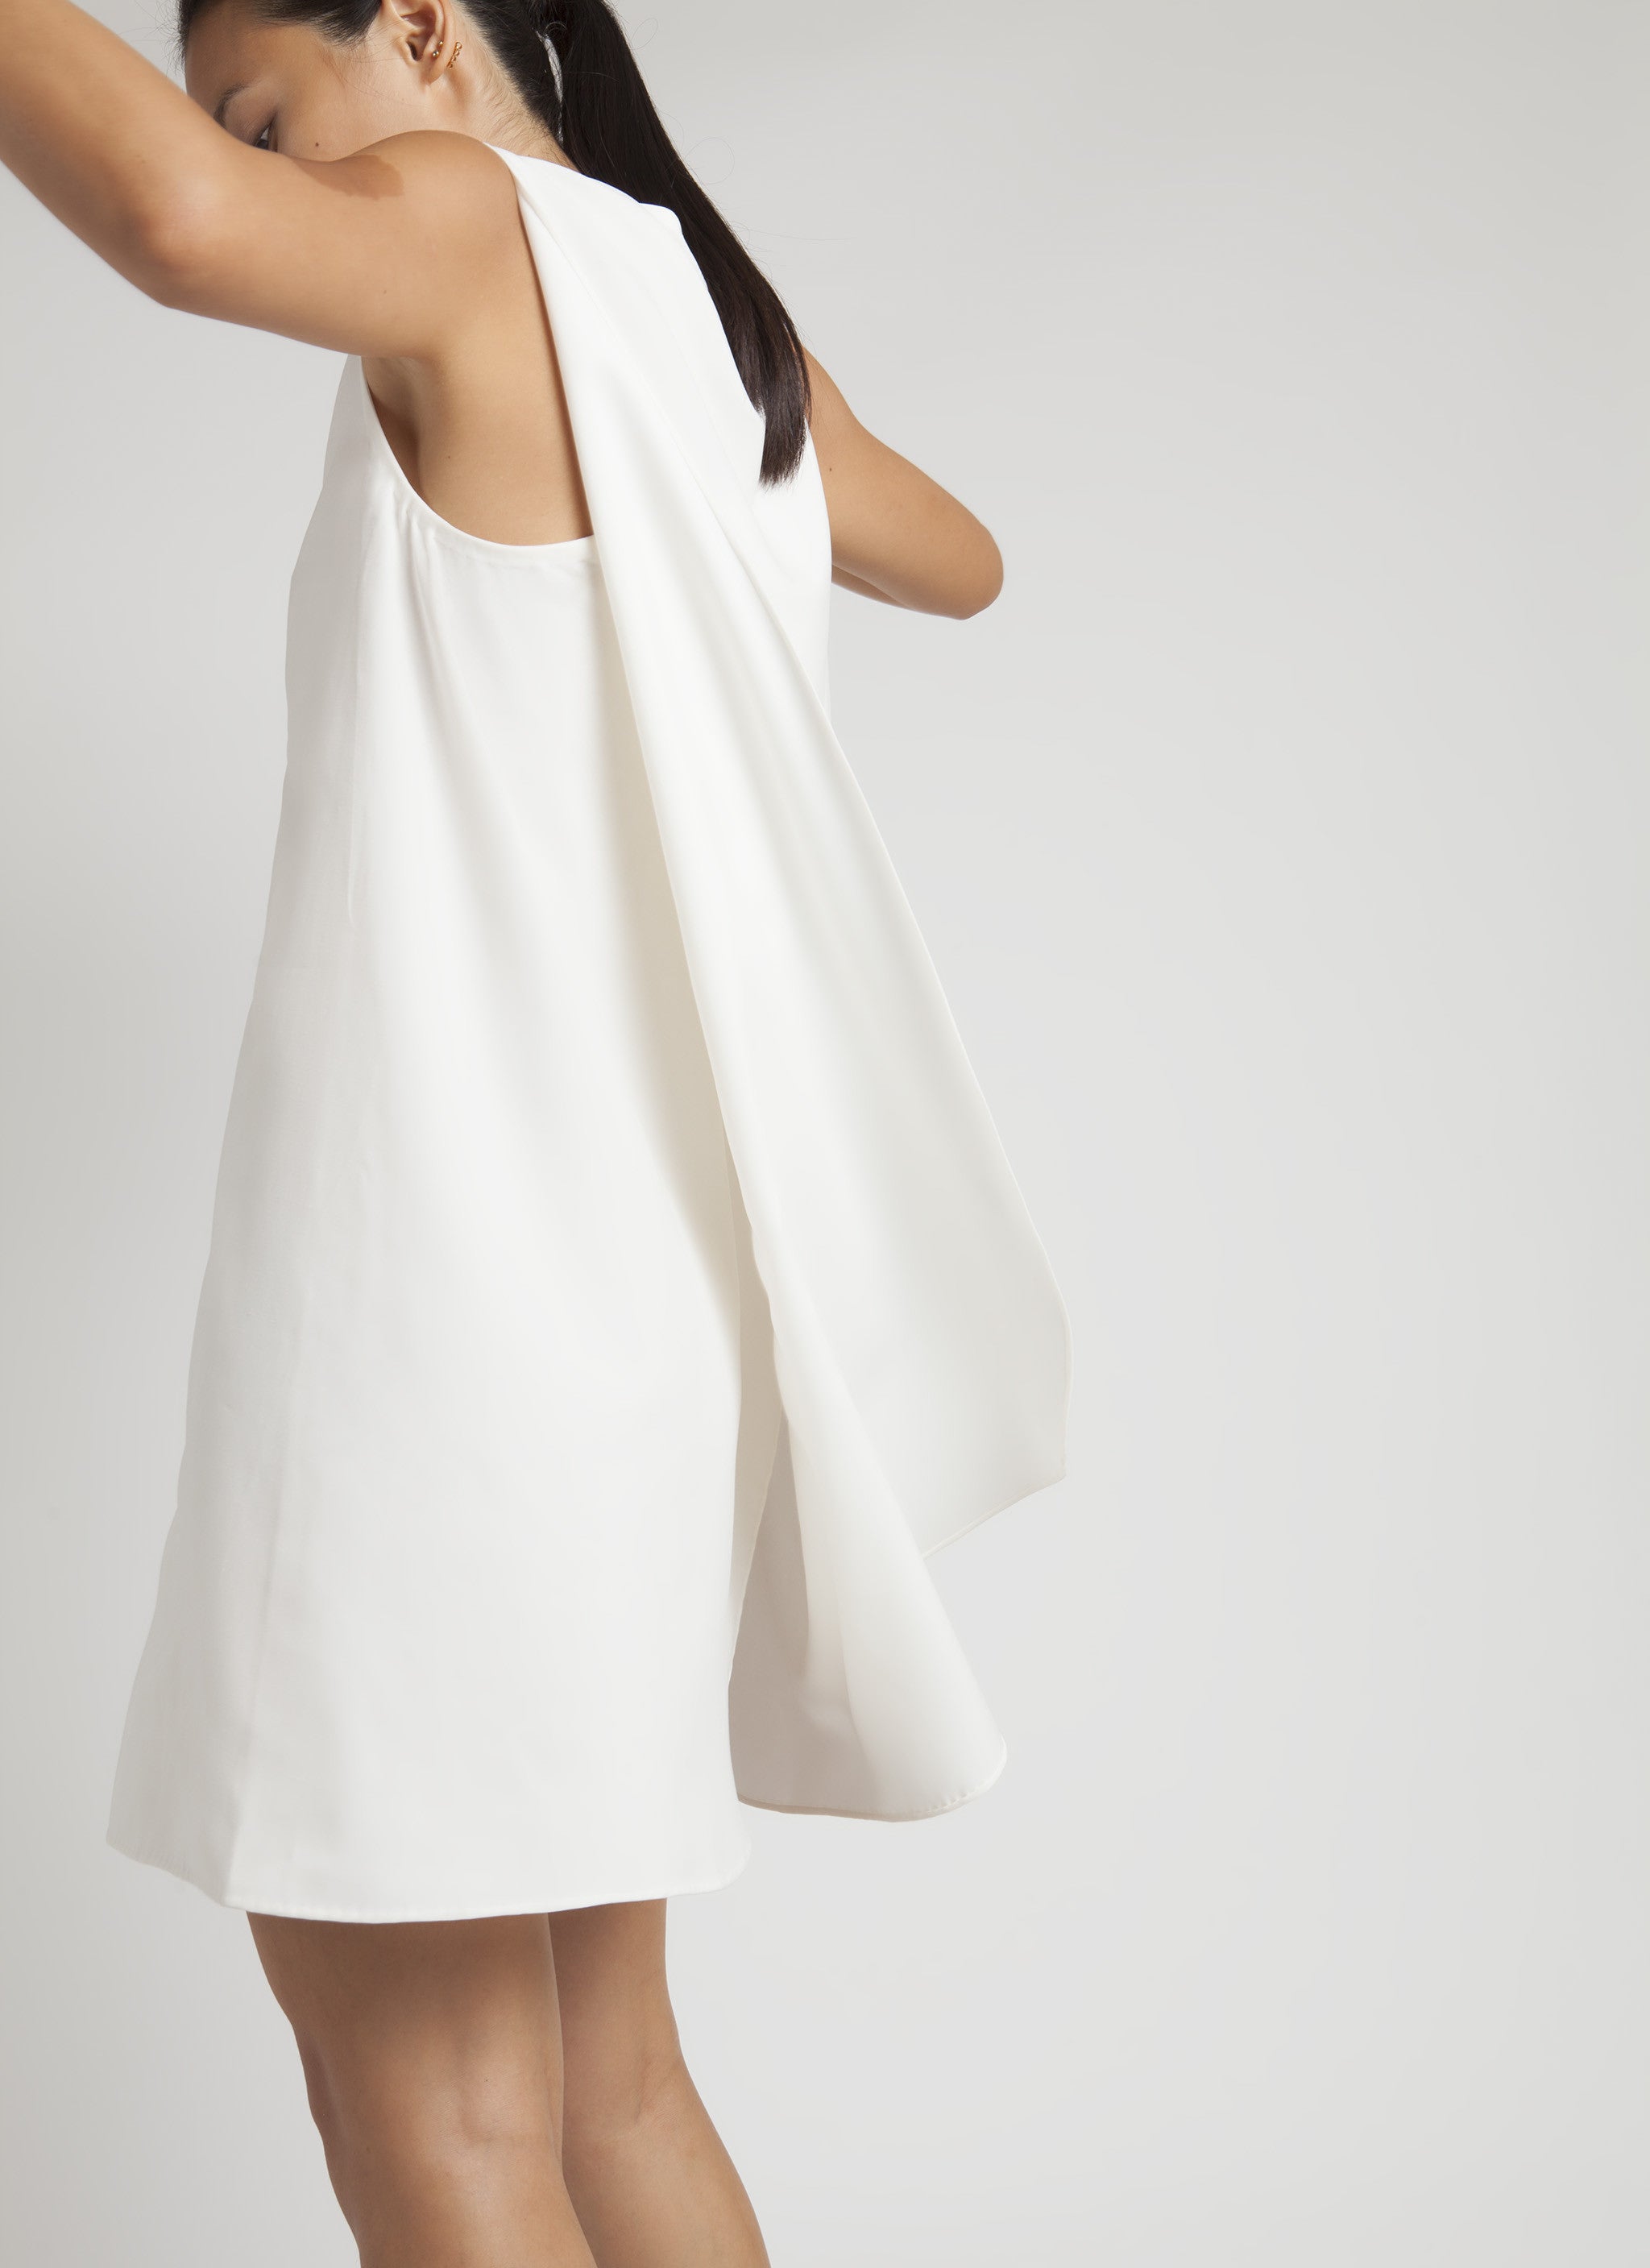 KAAREM - Piece of Air Sleeveless Overlap Dress - White